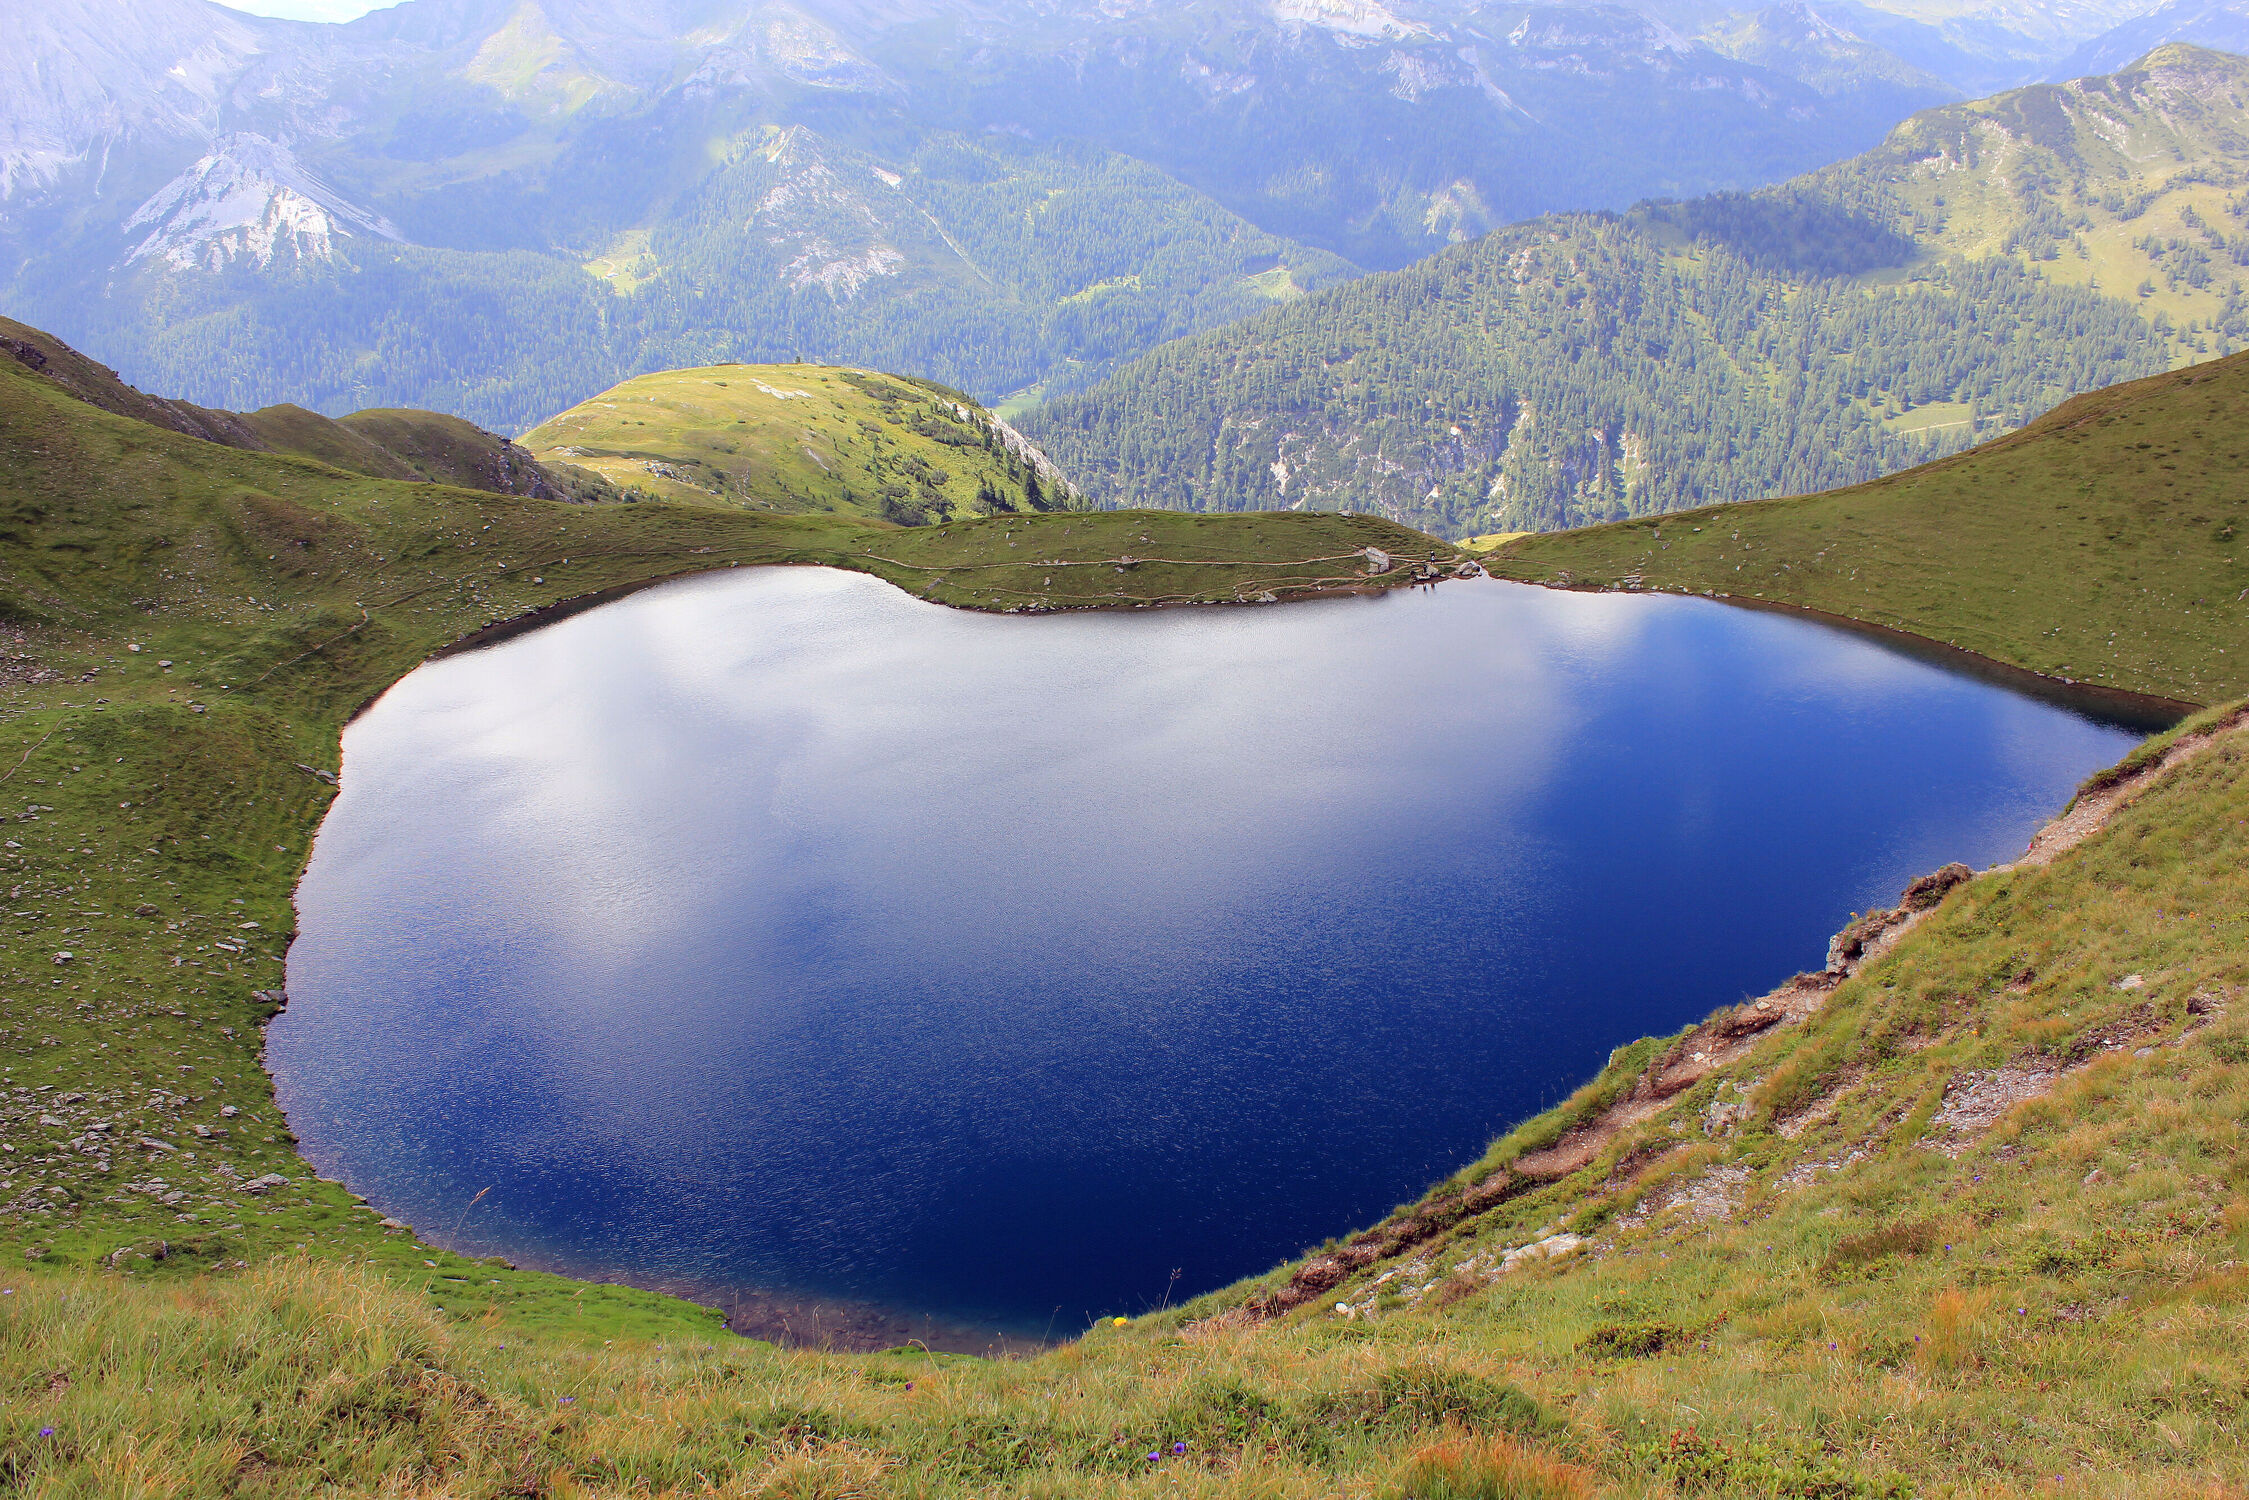 Bild mit blue, water, summer, sun, mountain, reflection, lake, sunny day, mountain lake, blue water